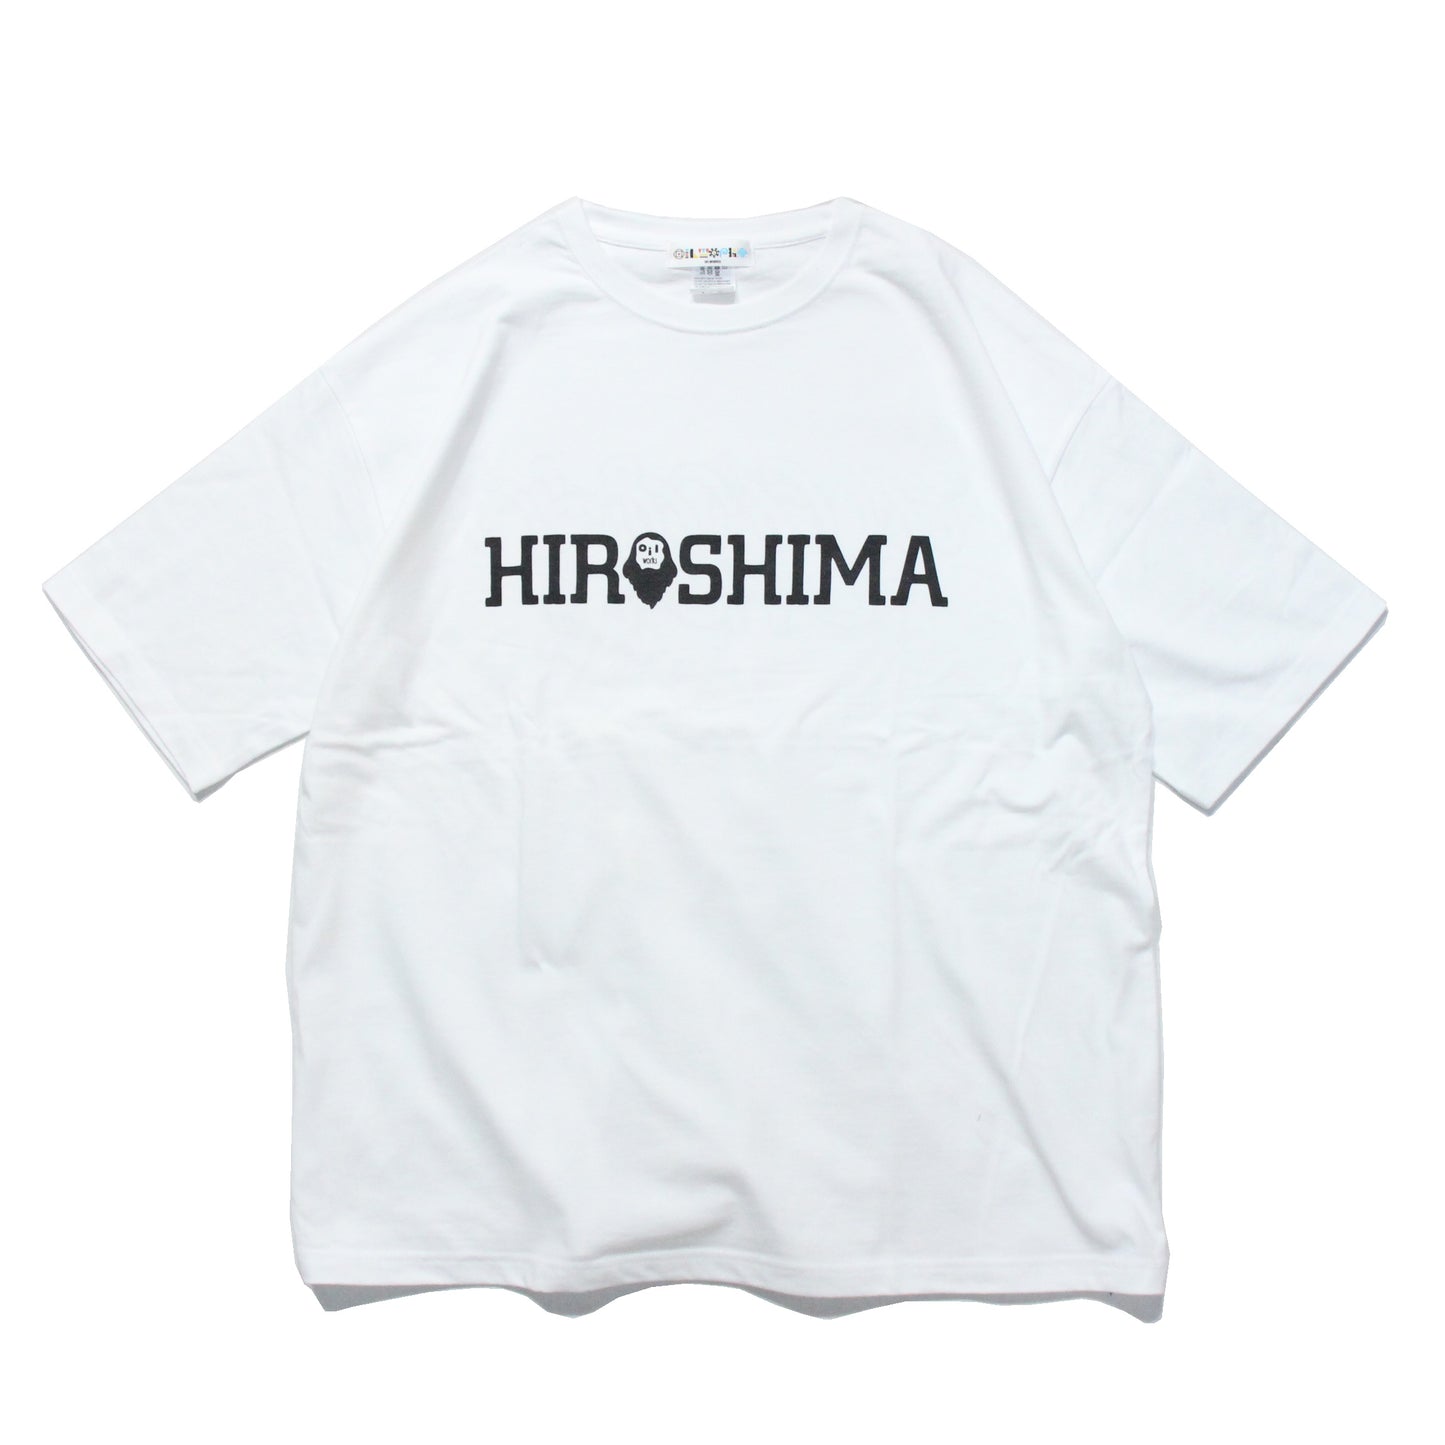 HIROSHIMA OIL T-SHIRTS